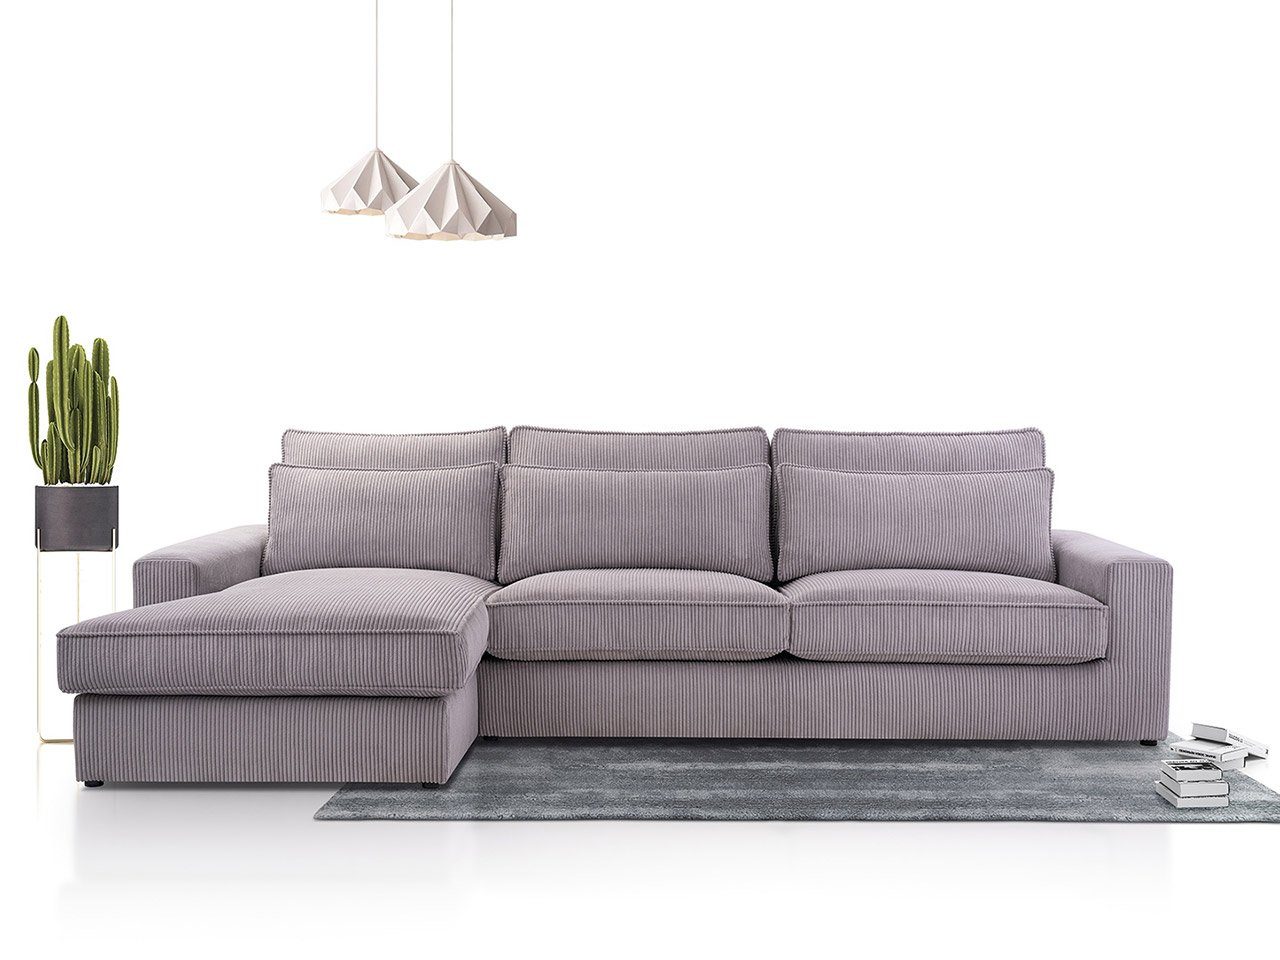 MKS MÖBEL Ecksofa CANES, L - Form Couch, mit lose Kissen, modern Ecksofa Grau Lincoln